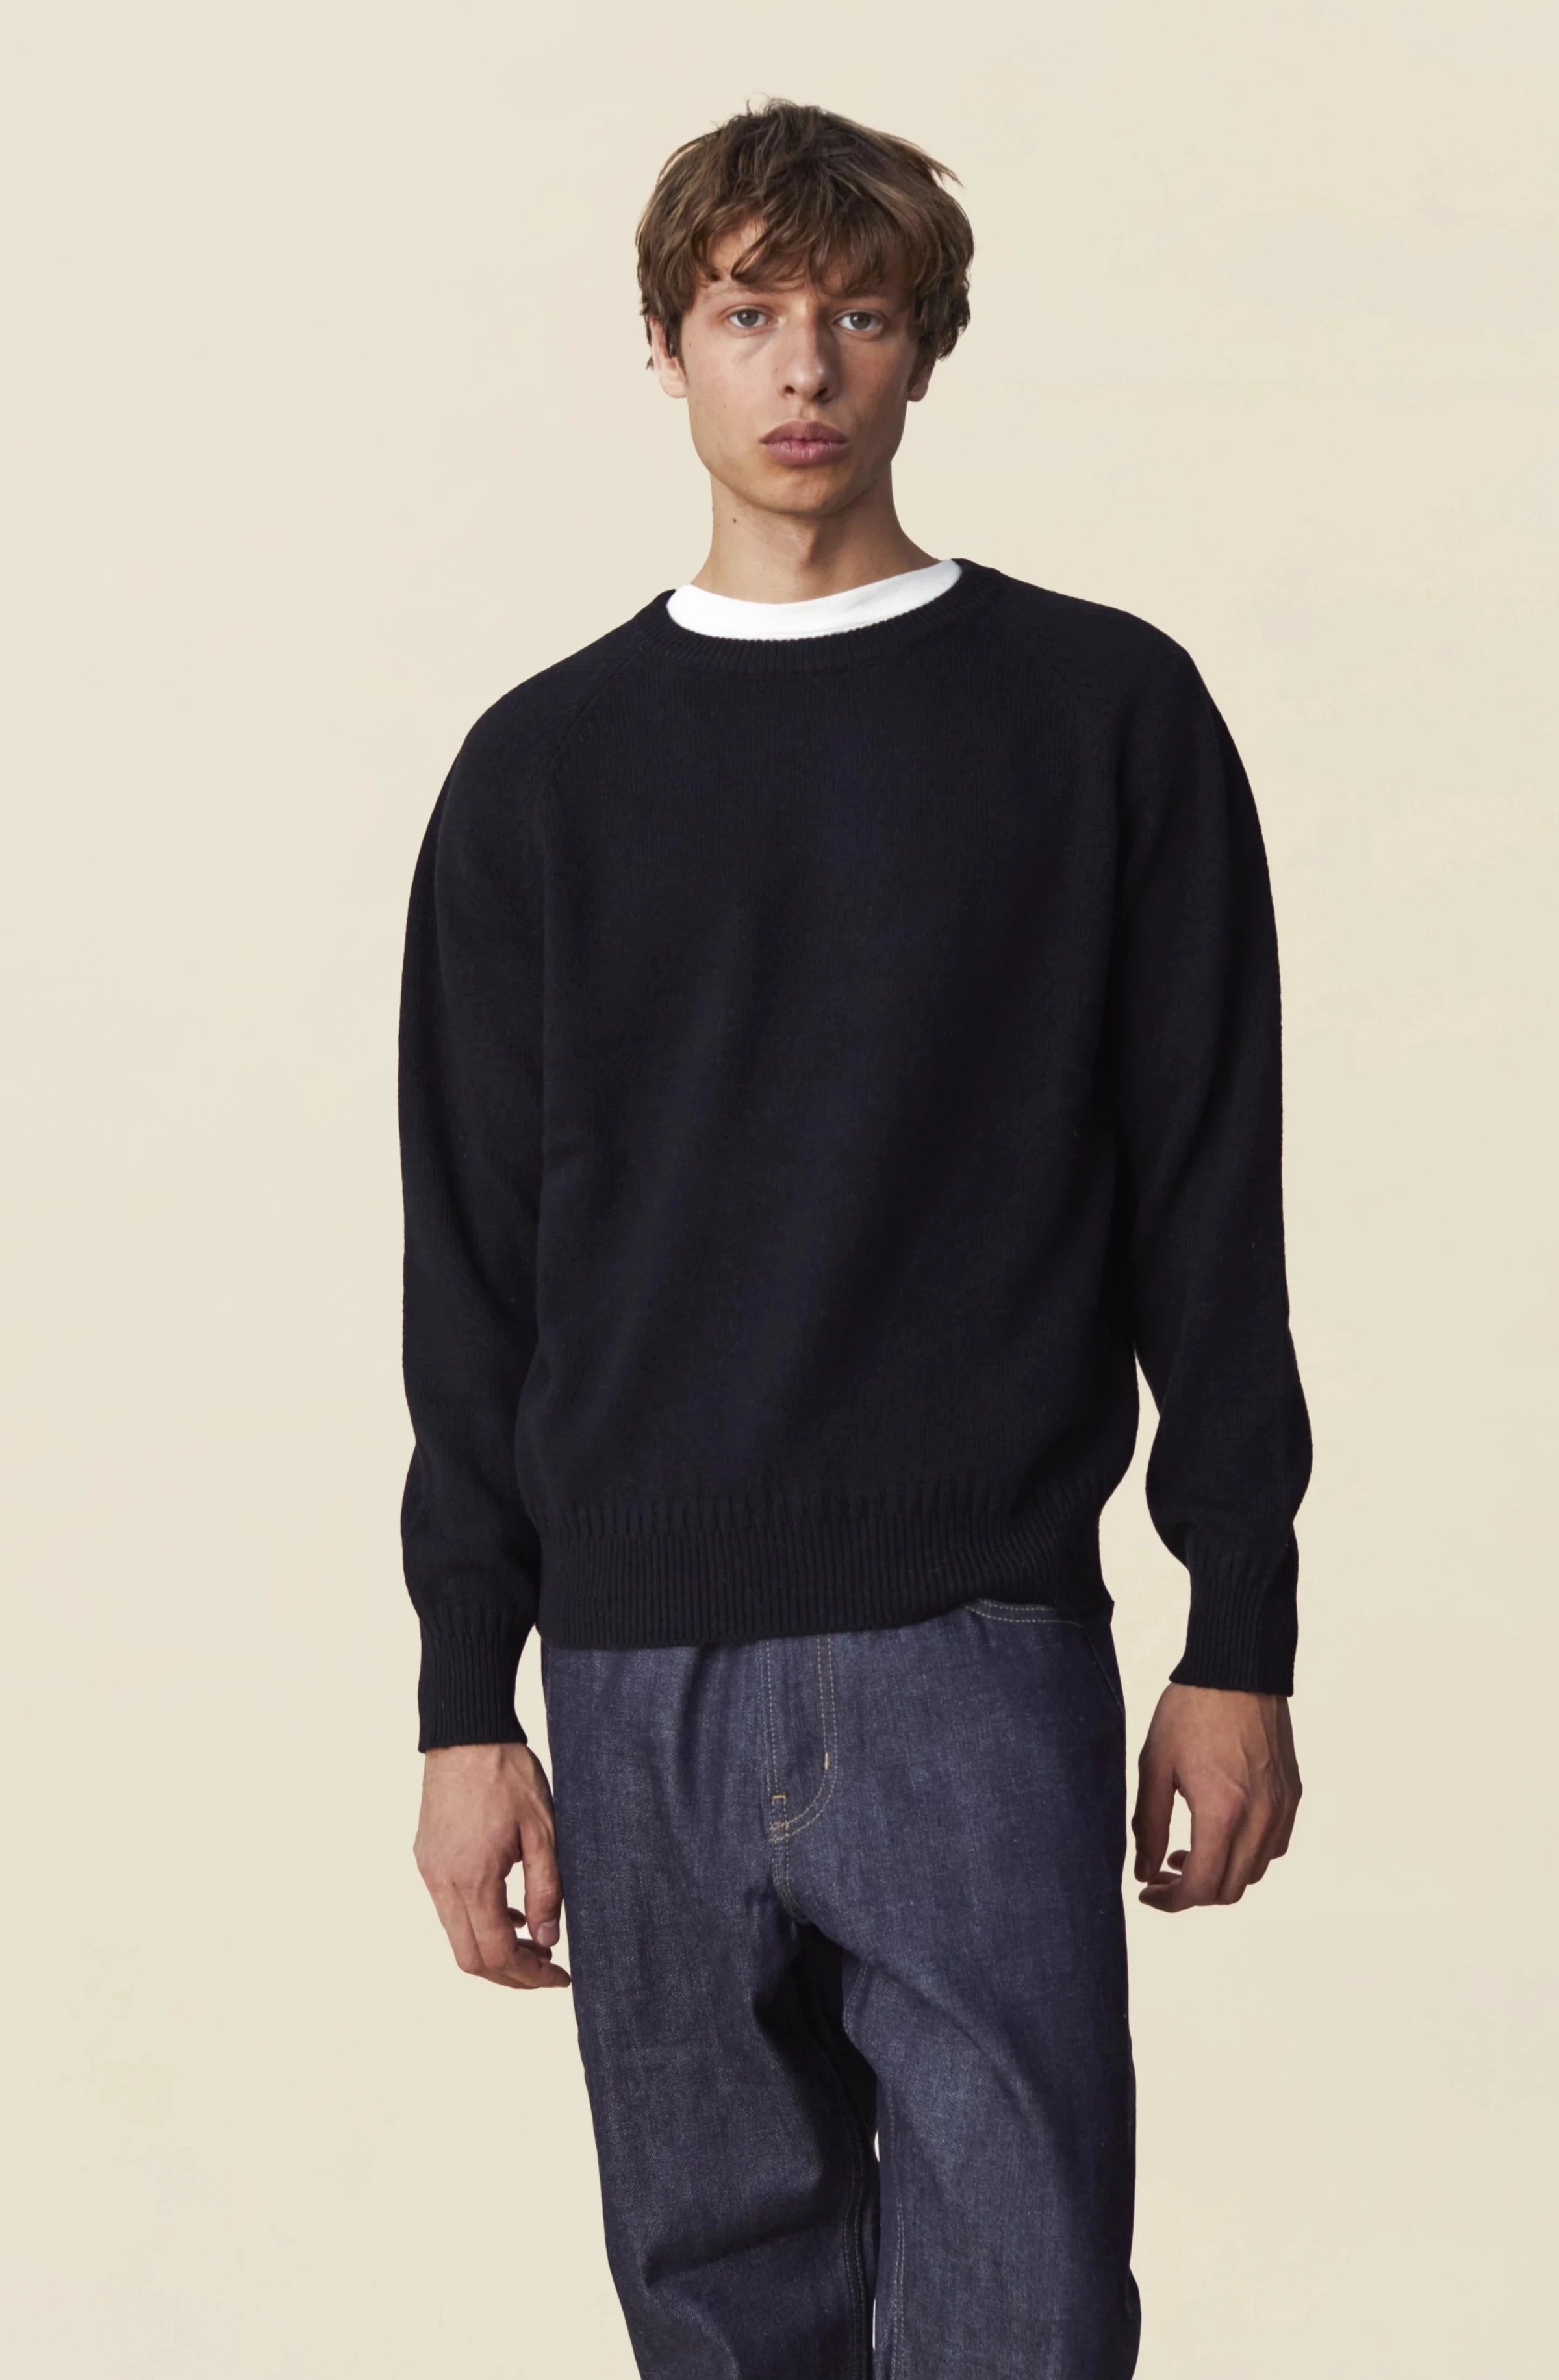 Sweater Crewneck in Black Cashmere